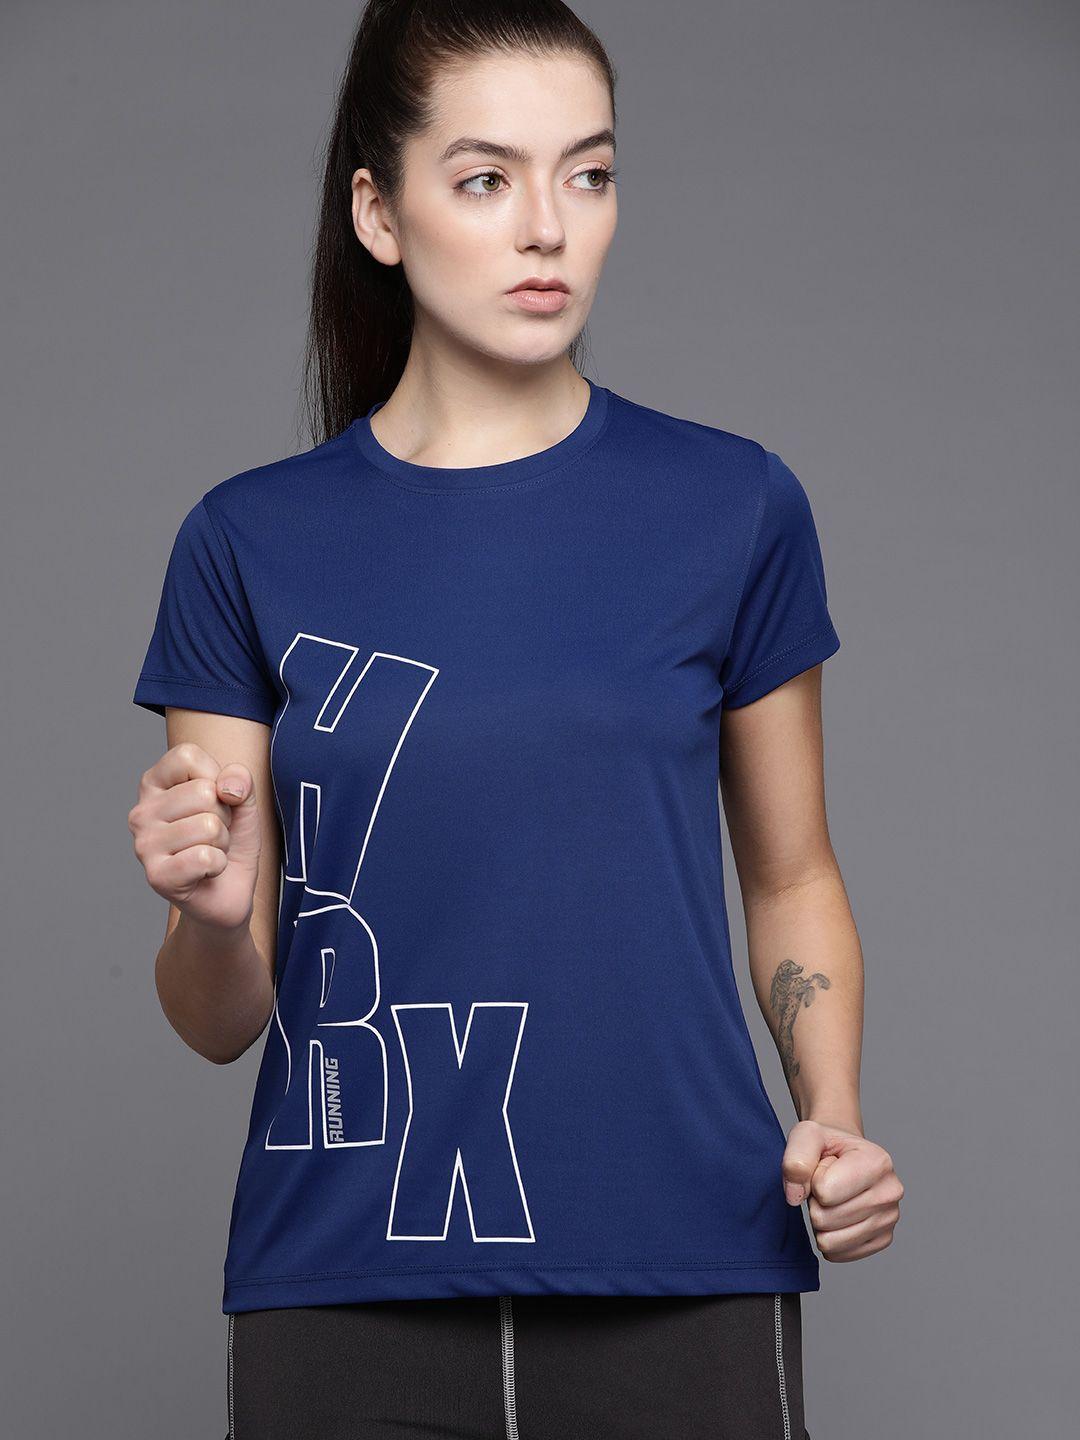 hrx-by-hrithik-roshan-brand-logo-printed-sports-t-shirt